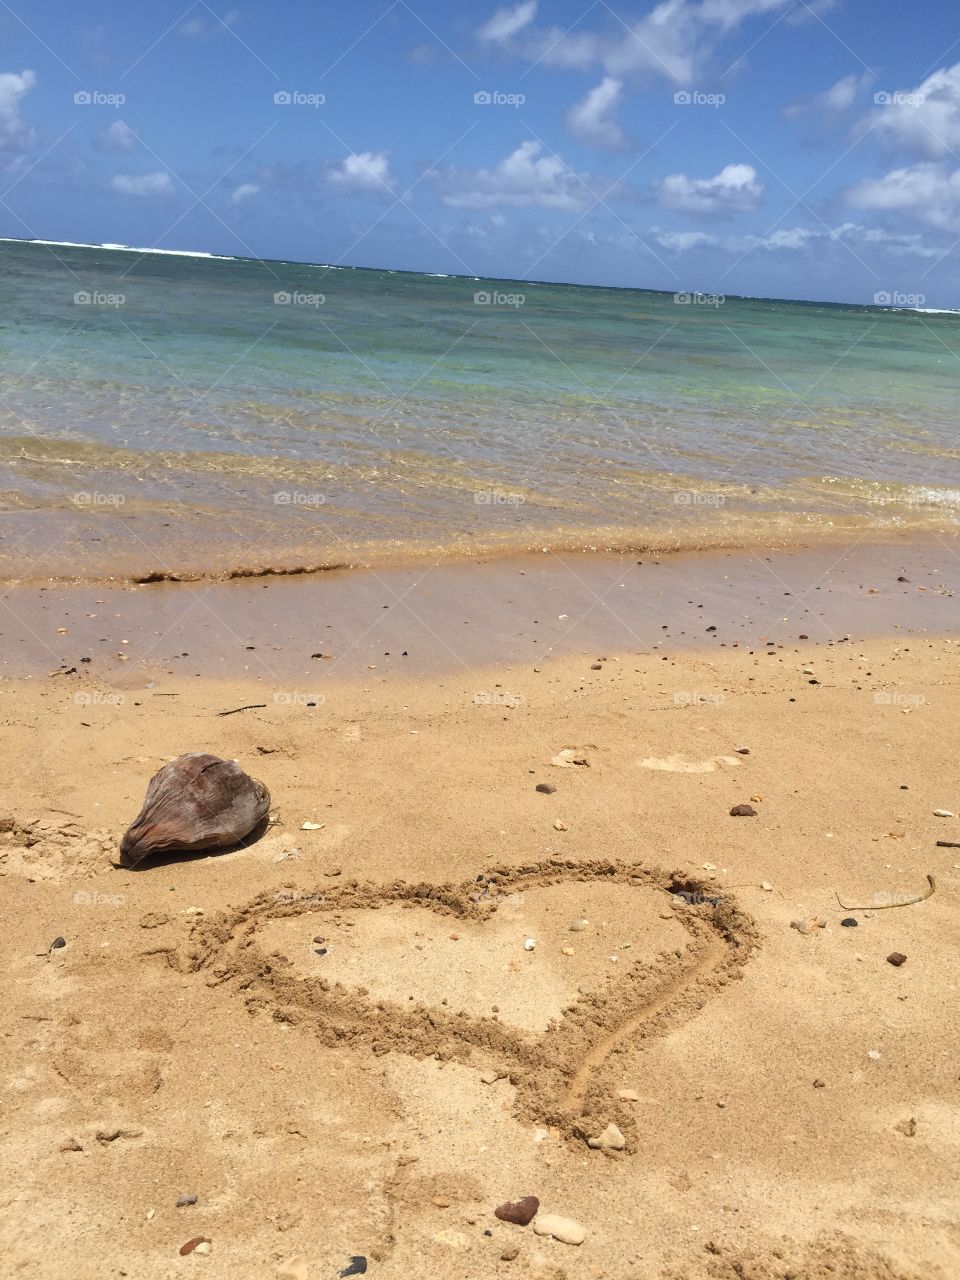 My heart belongs to Kauai 